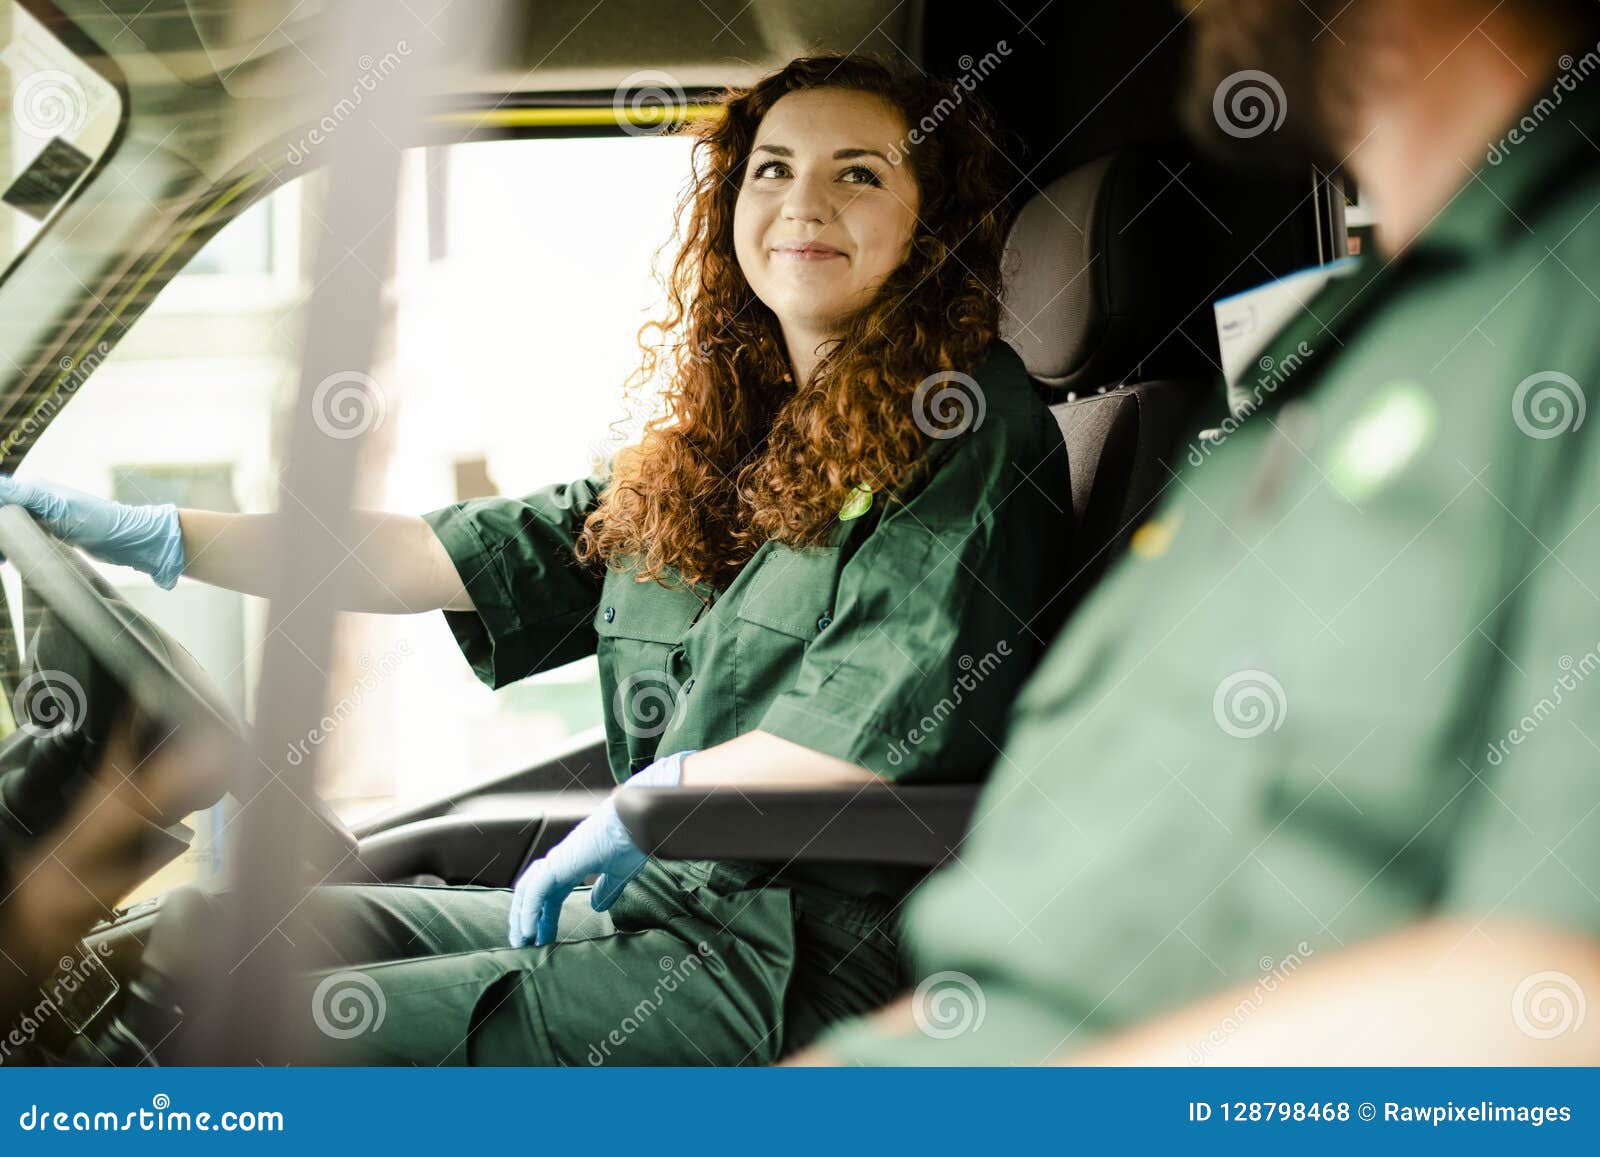 paramedic woman driving an ambulance